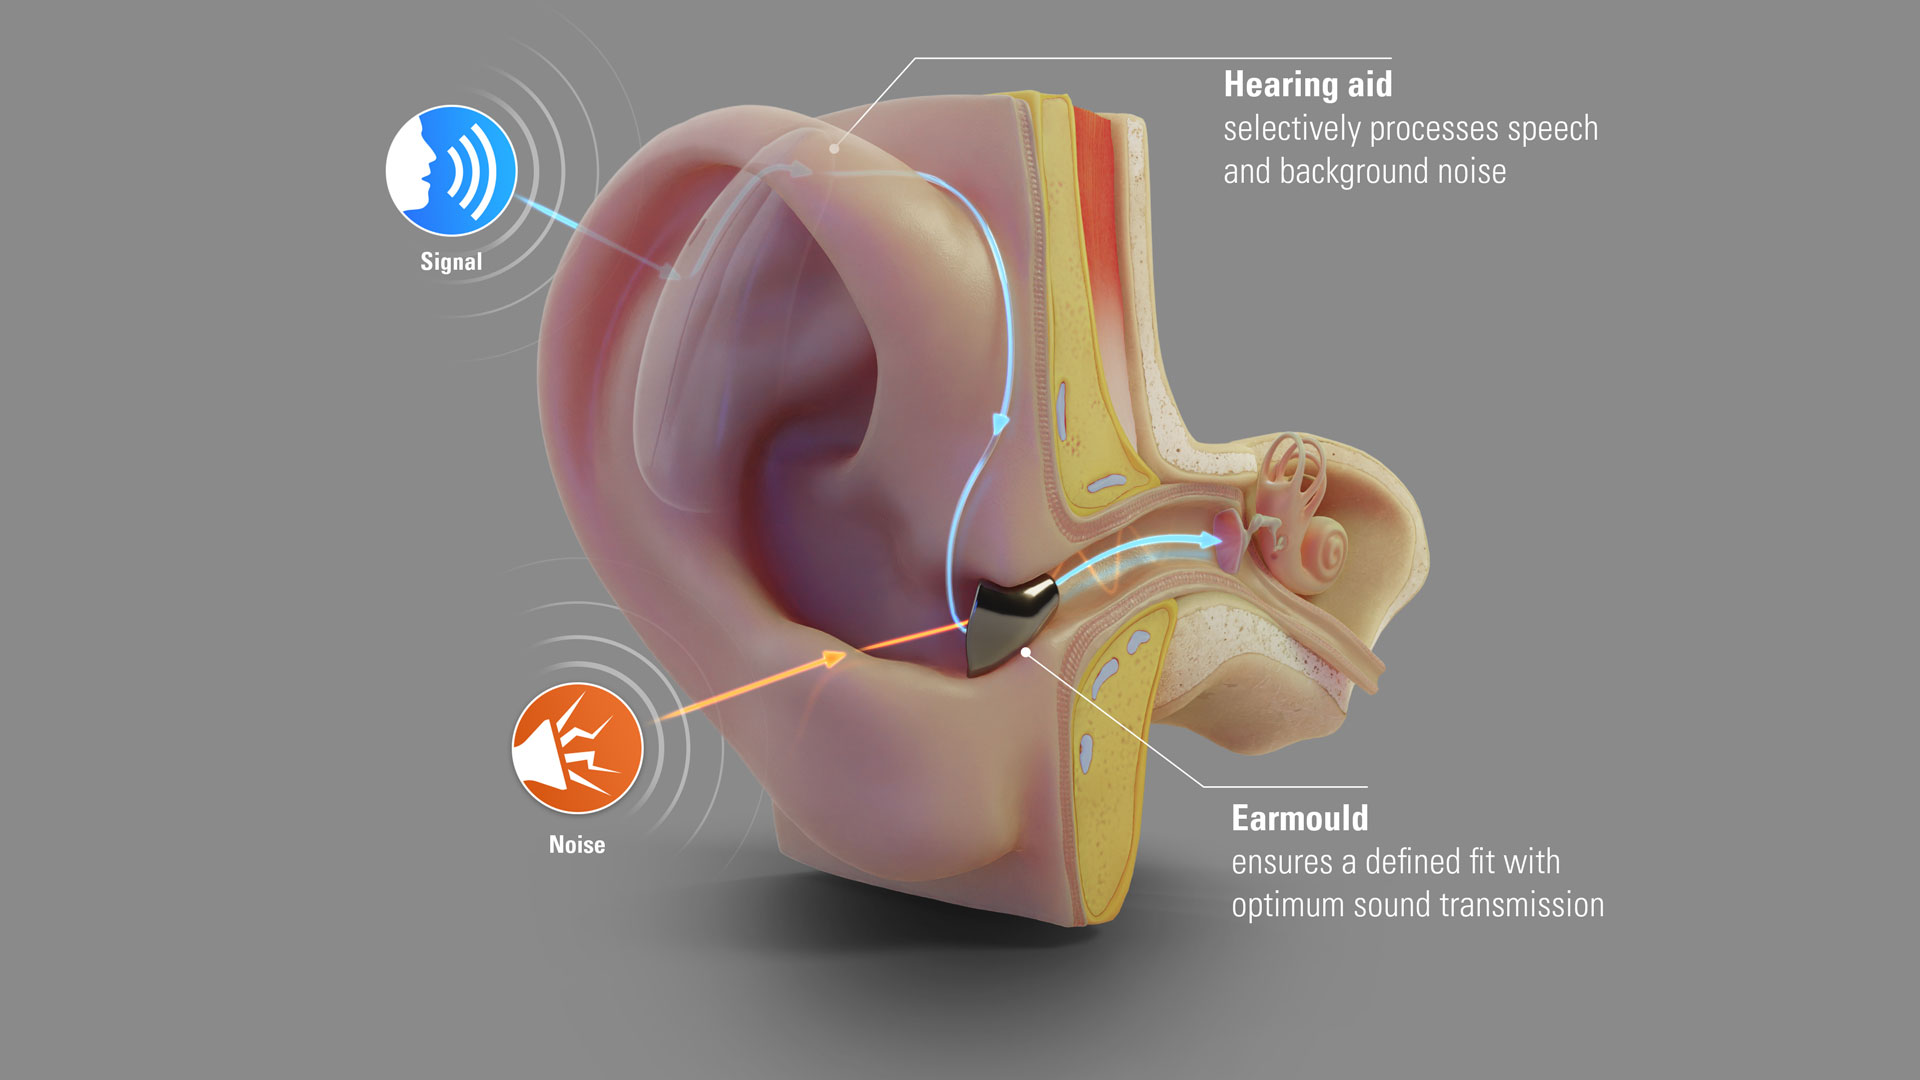 Advantages of an earmould